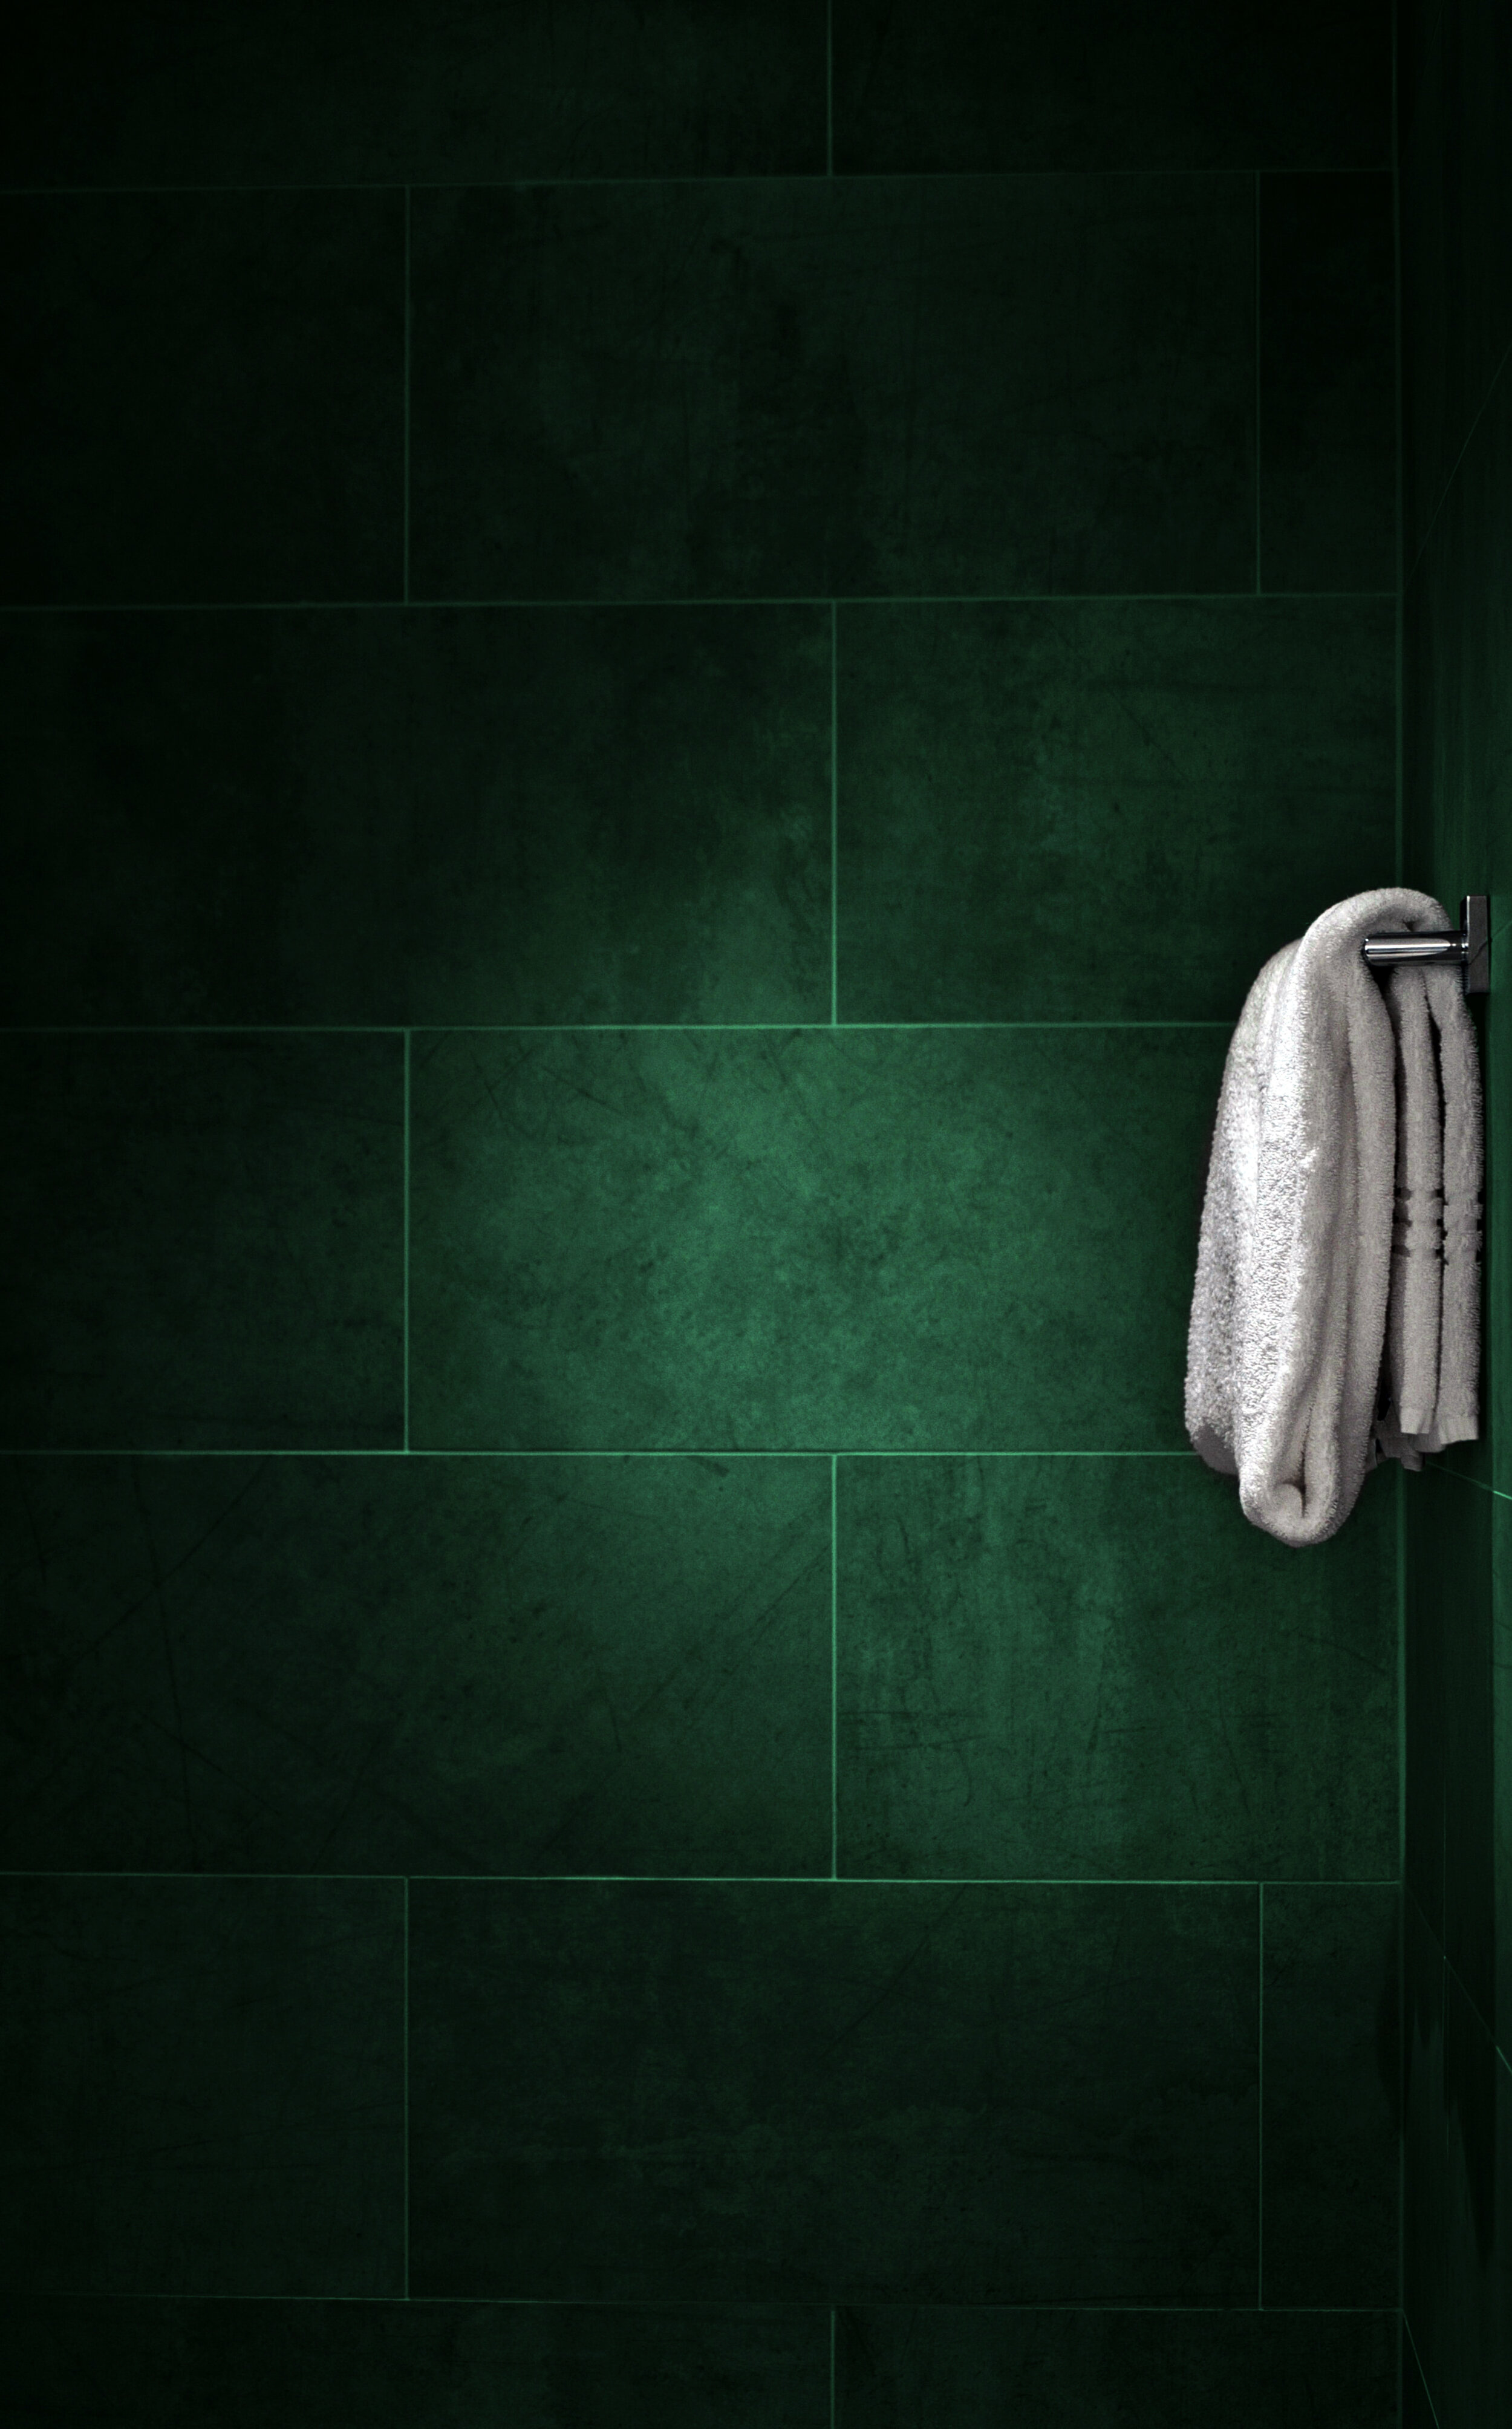 Episode 247: More Baths and Fewer Showers&lt;a href="https://www.strideandsaunter.com/new-blog/2019/12/11/episode-247-more-baths-and-fewer-showers"&gt;Listen →&lt;/a&gt;&lt;/p&gt;